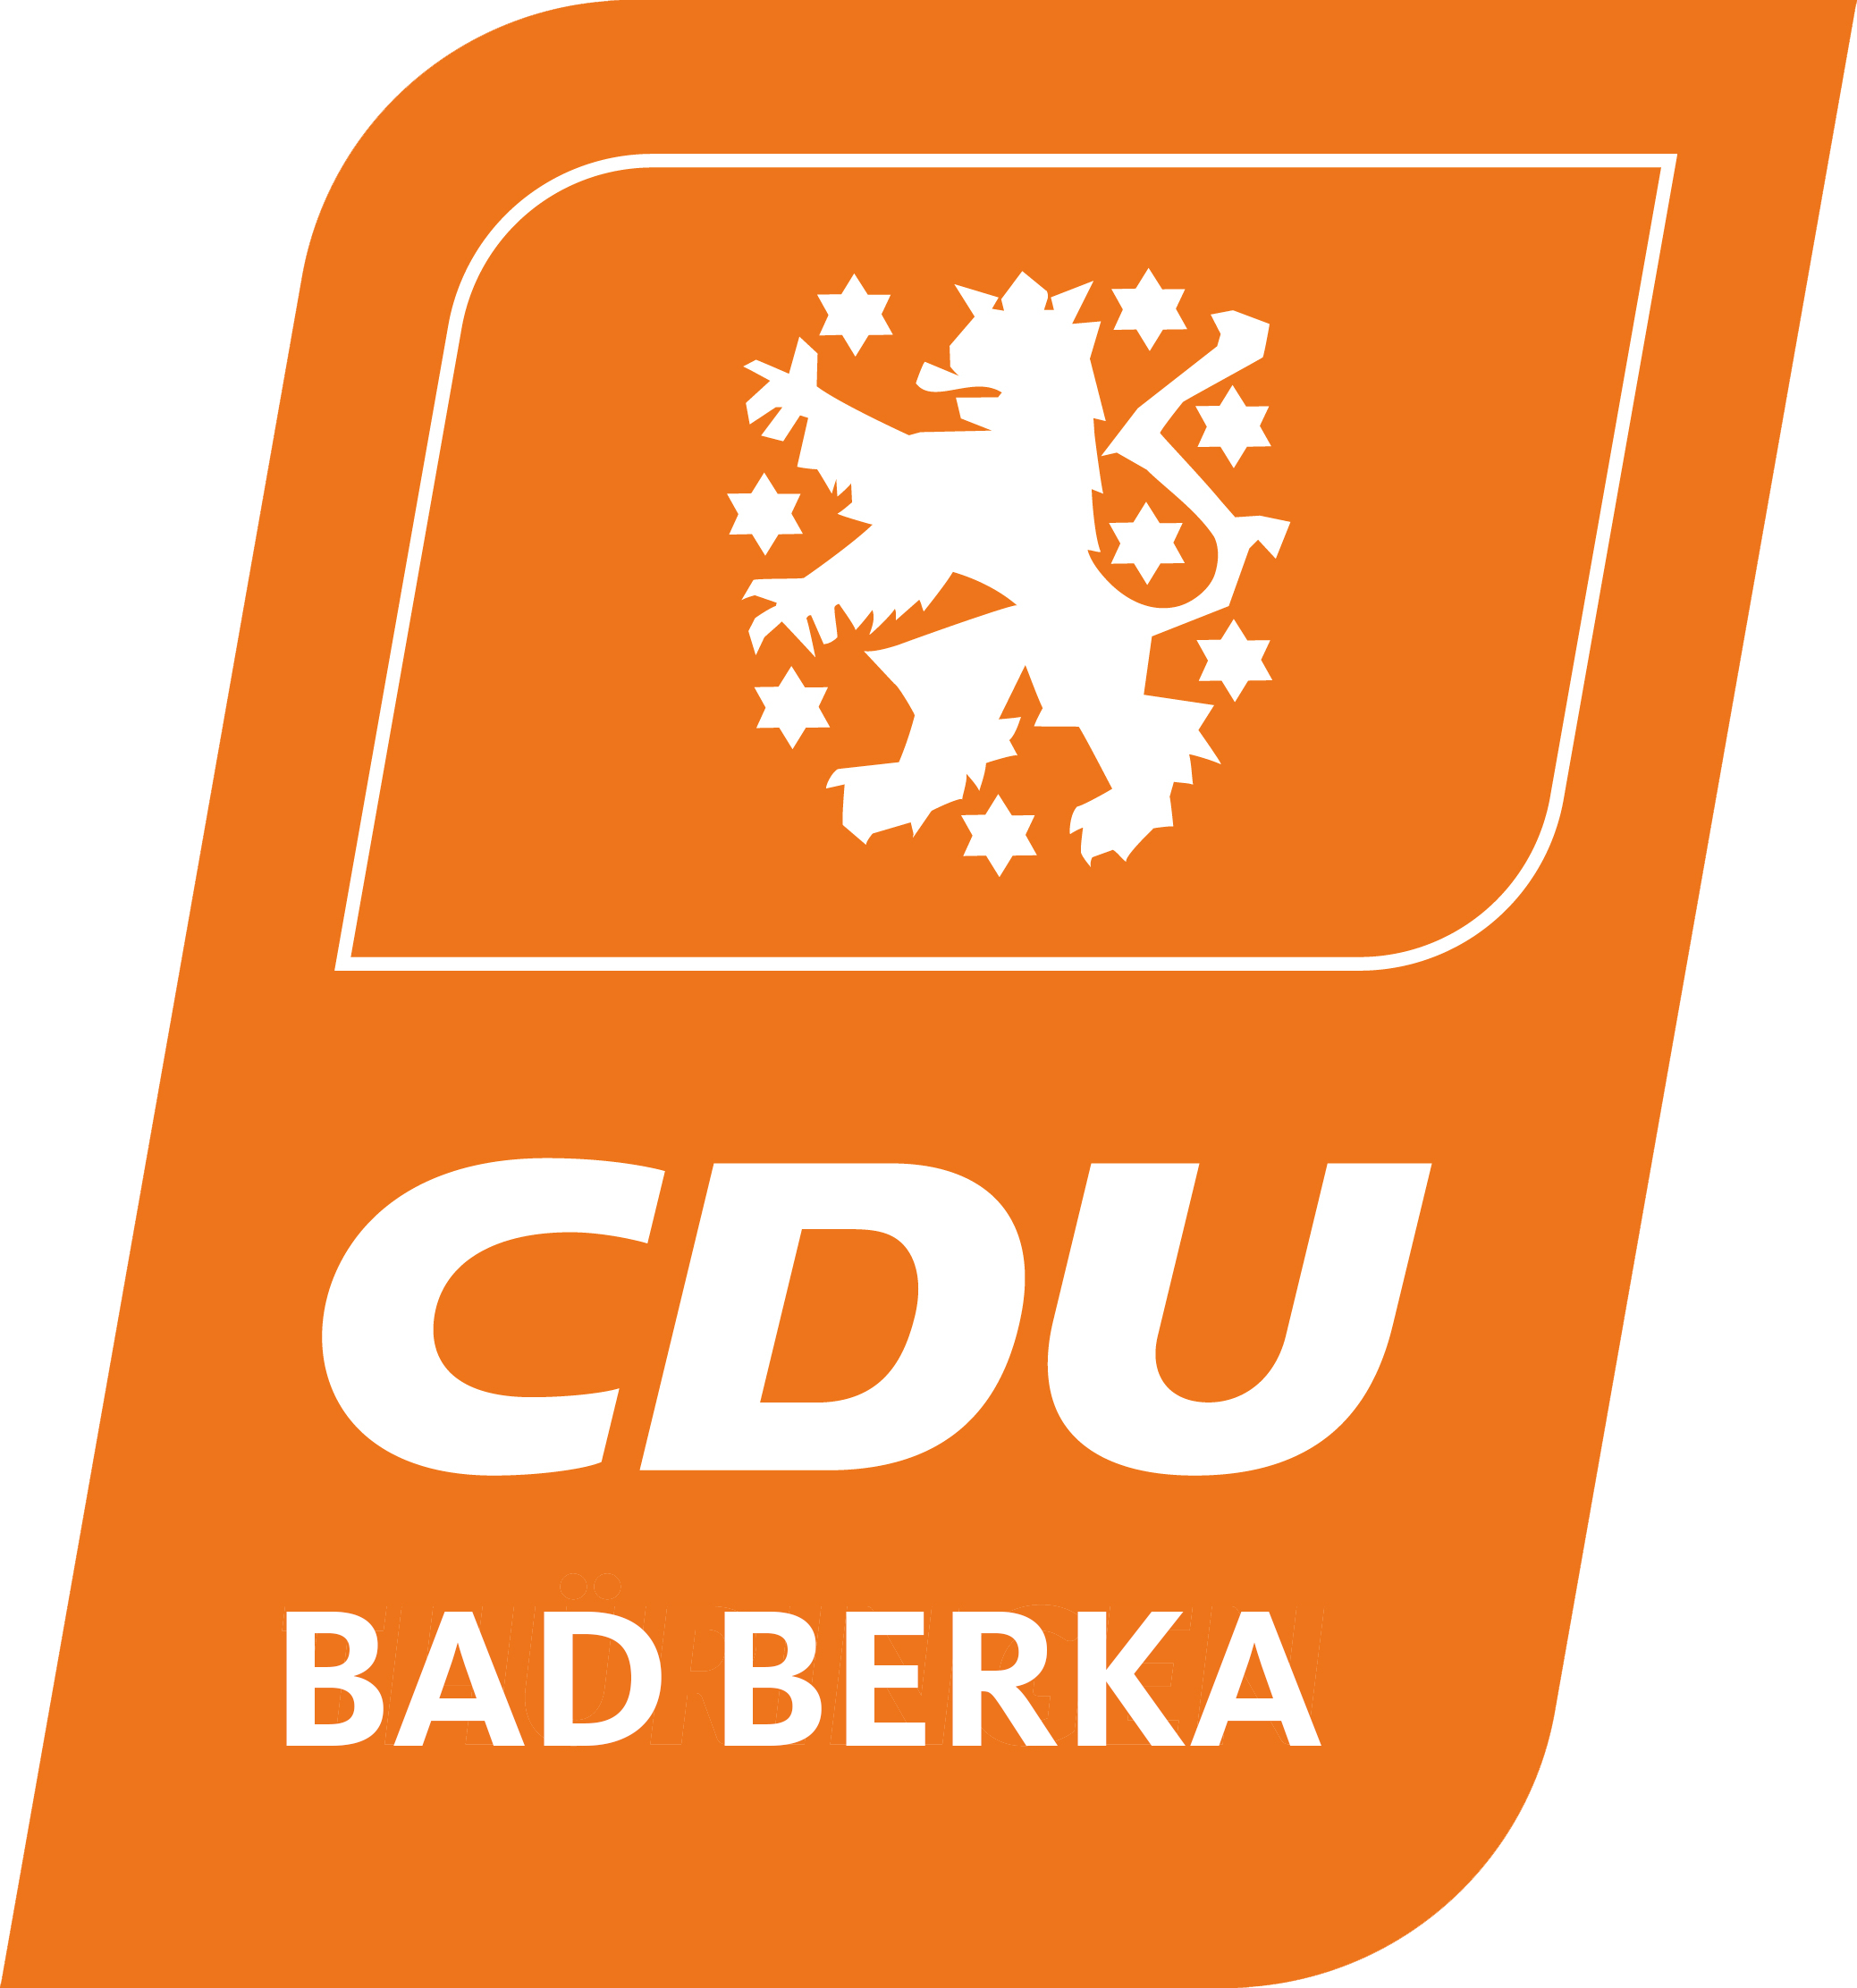 CDU Bad Berka